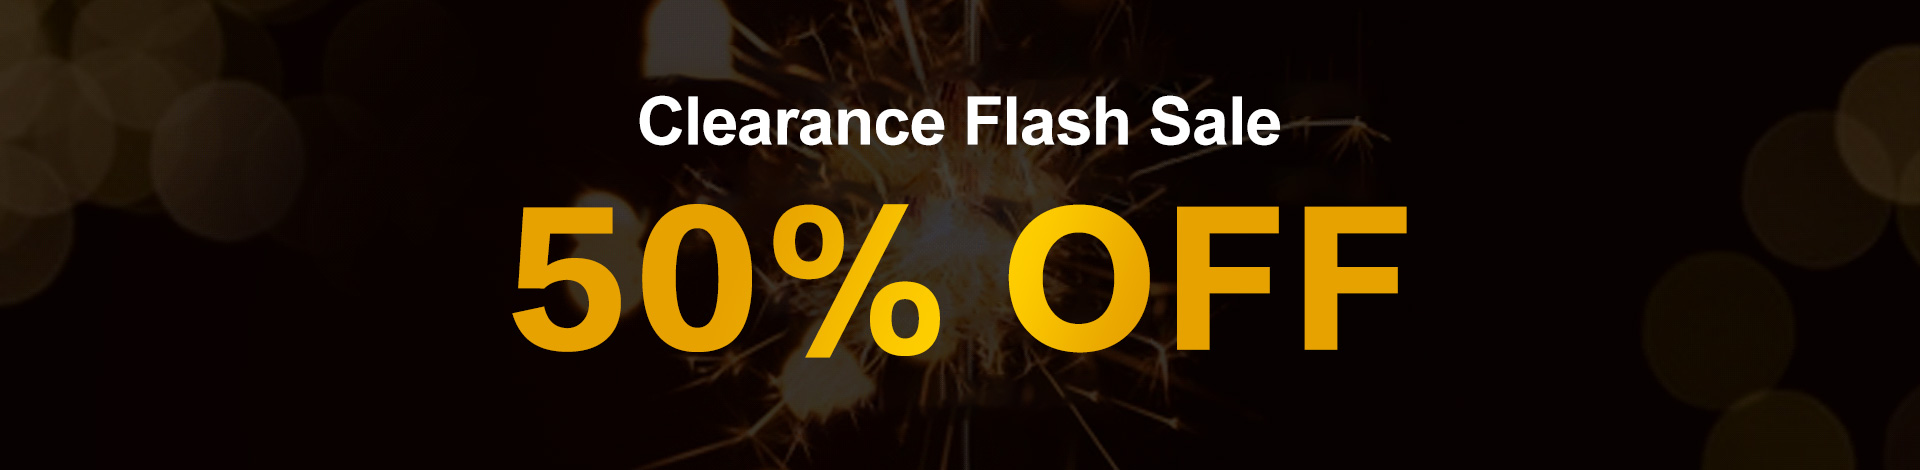 clearance flash sale